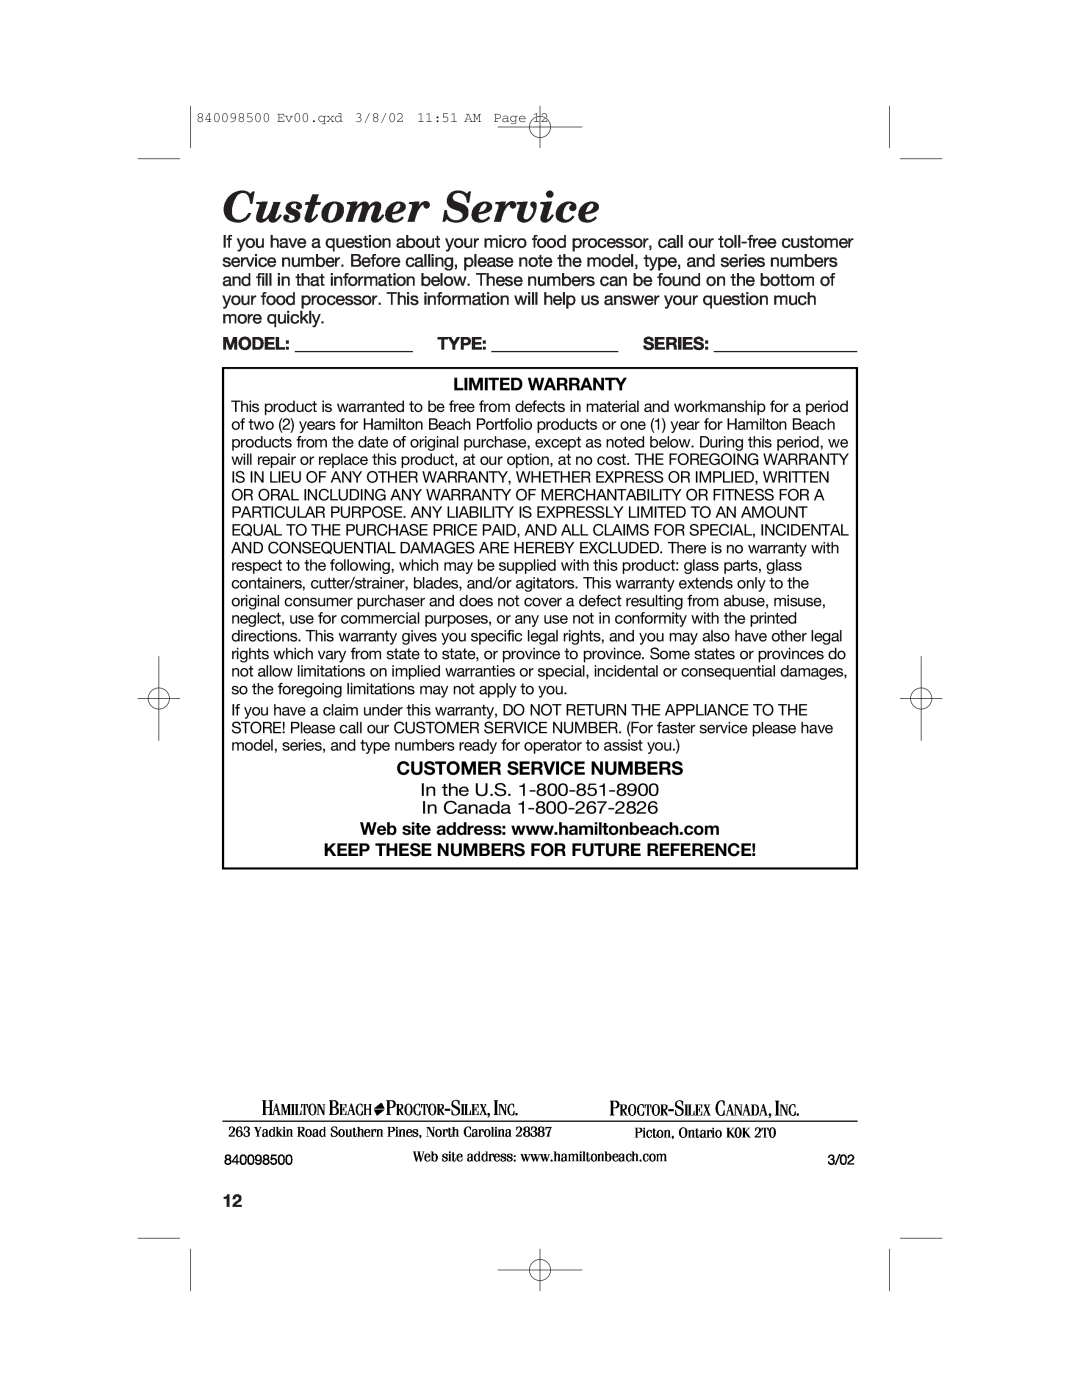 Hamilton Beach 70200 manual Customer Service Numbers, Model Type Series Limited Warranty, Proctor -Silex , Inc 